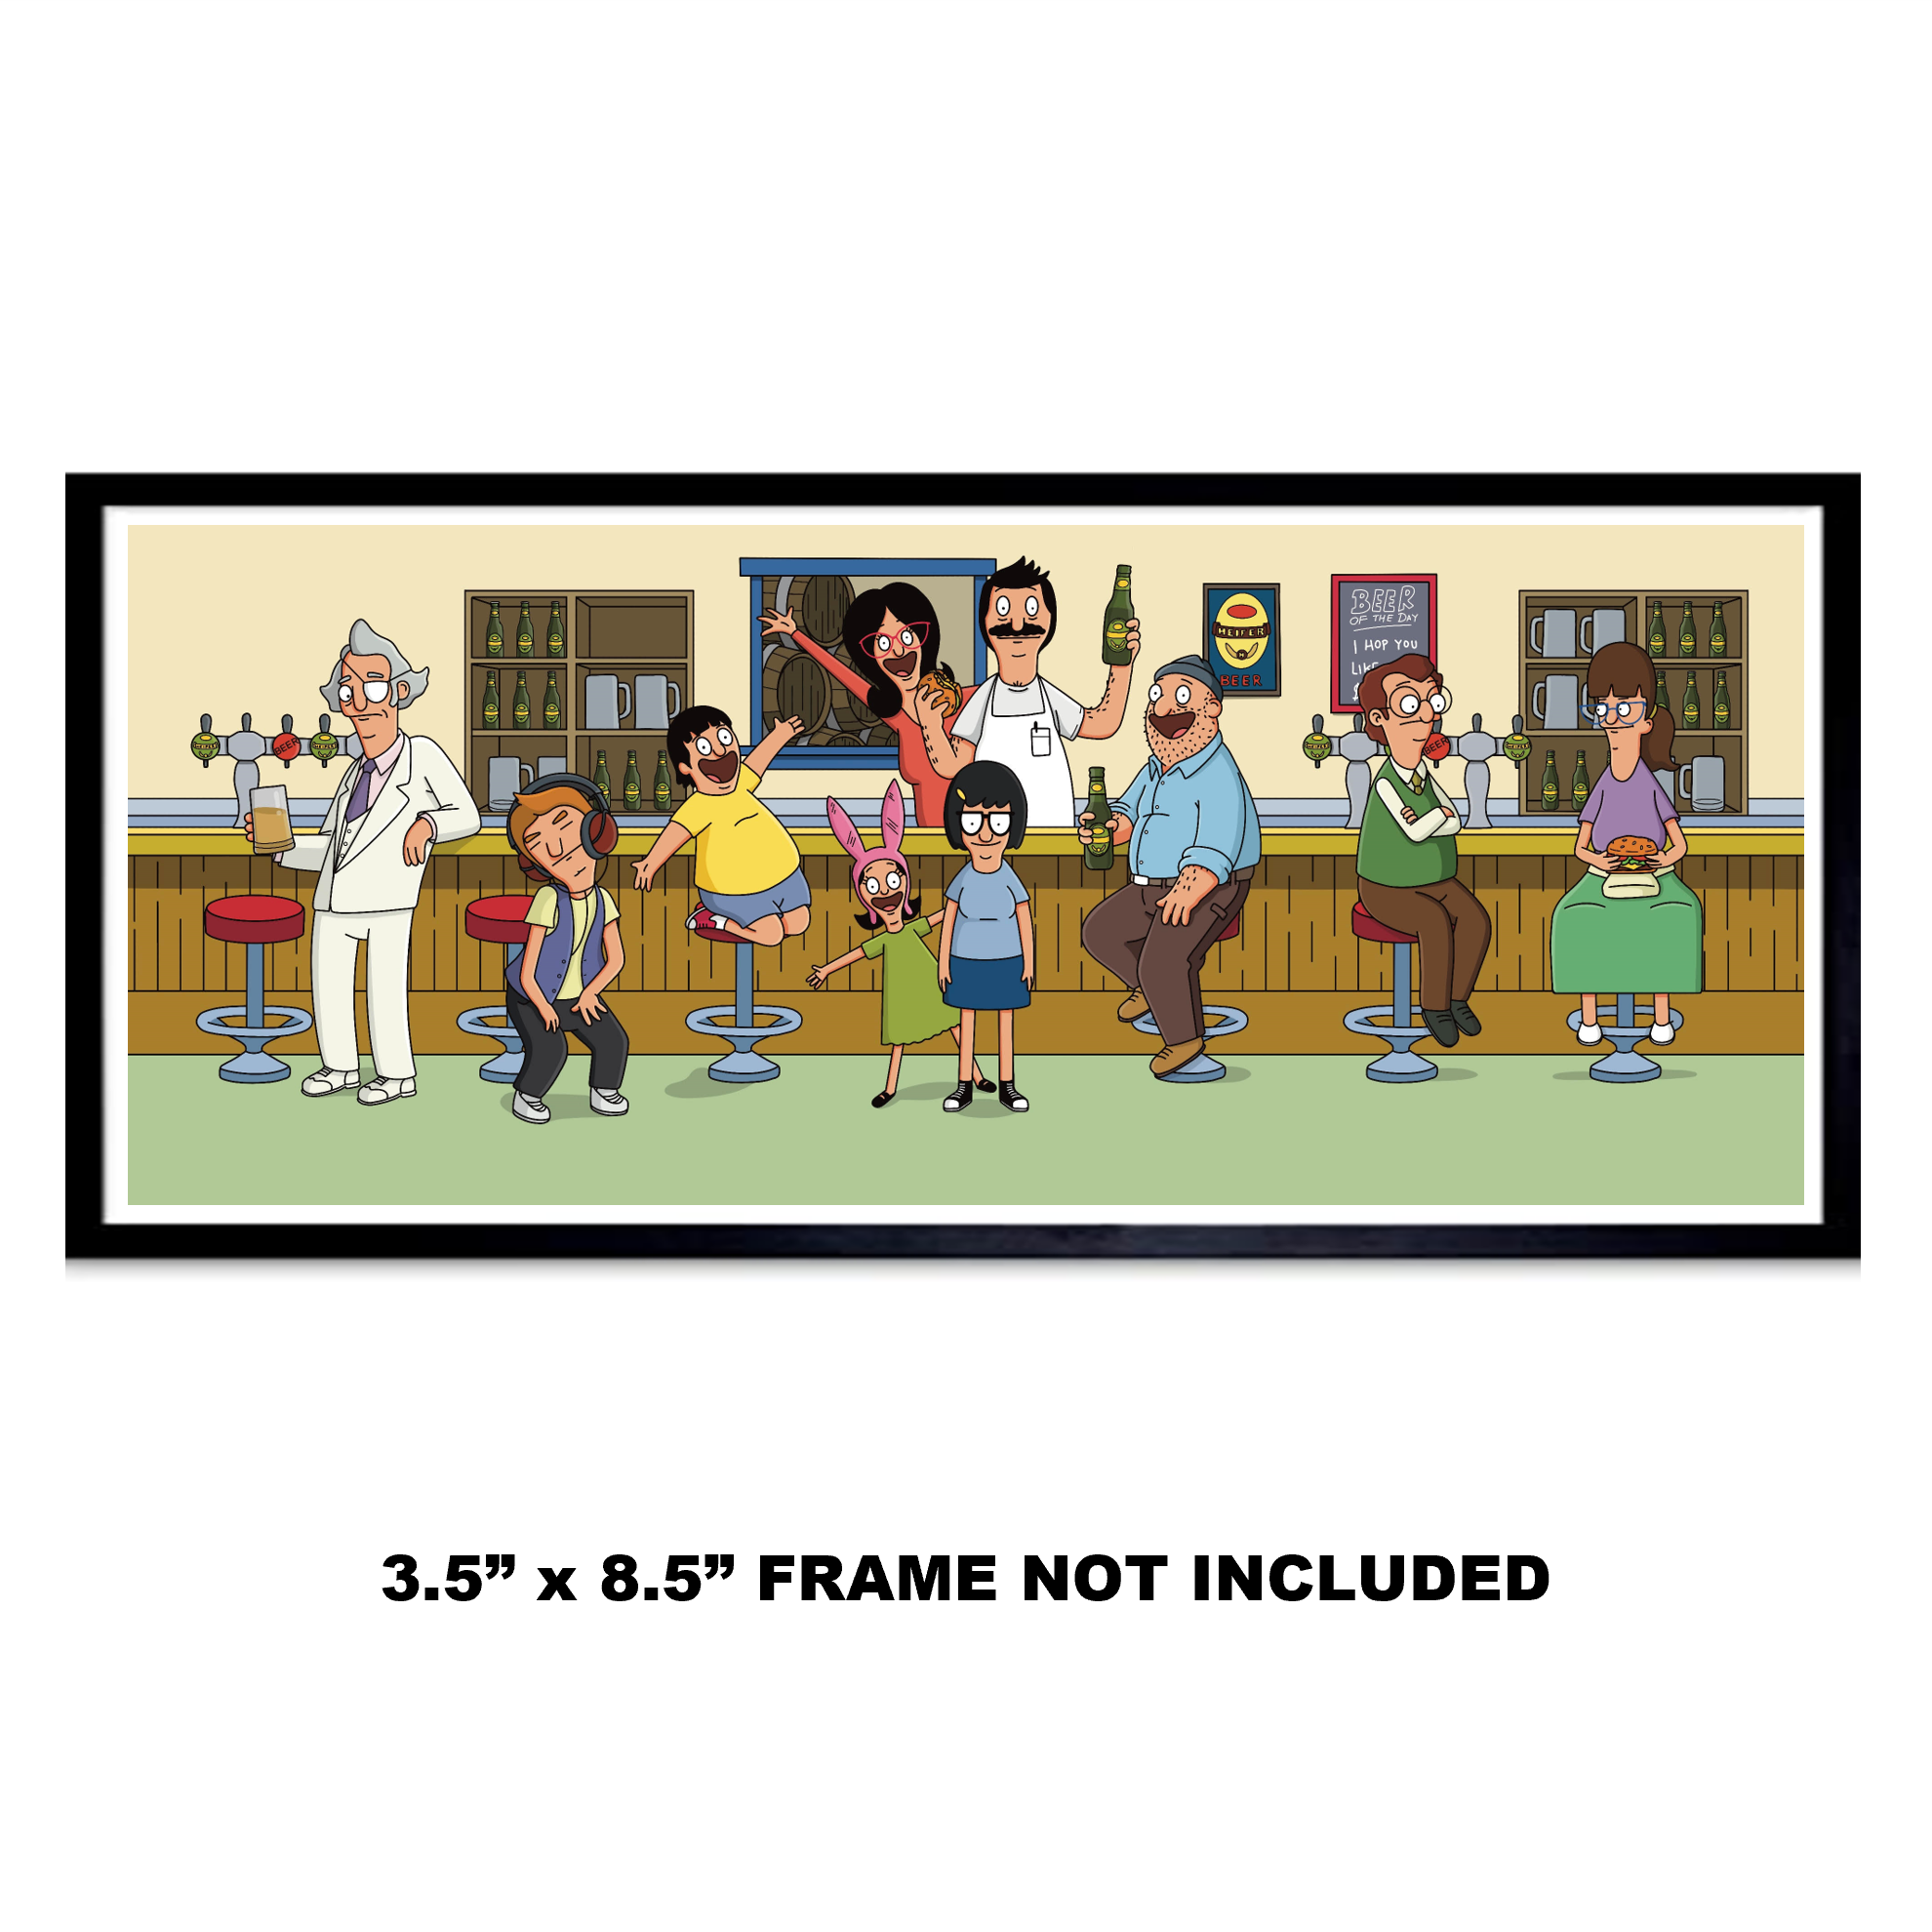 Single Product Image 3.5" x 8.5" PRINT "Bob's Brewpub" (free shipping)